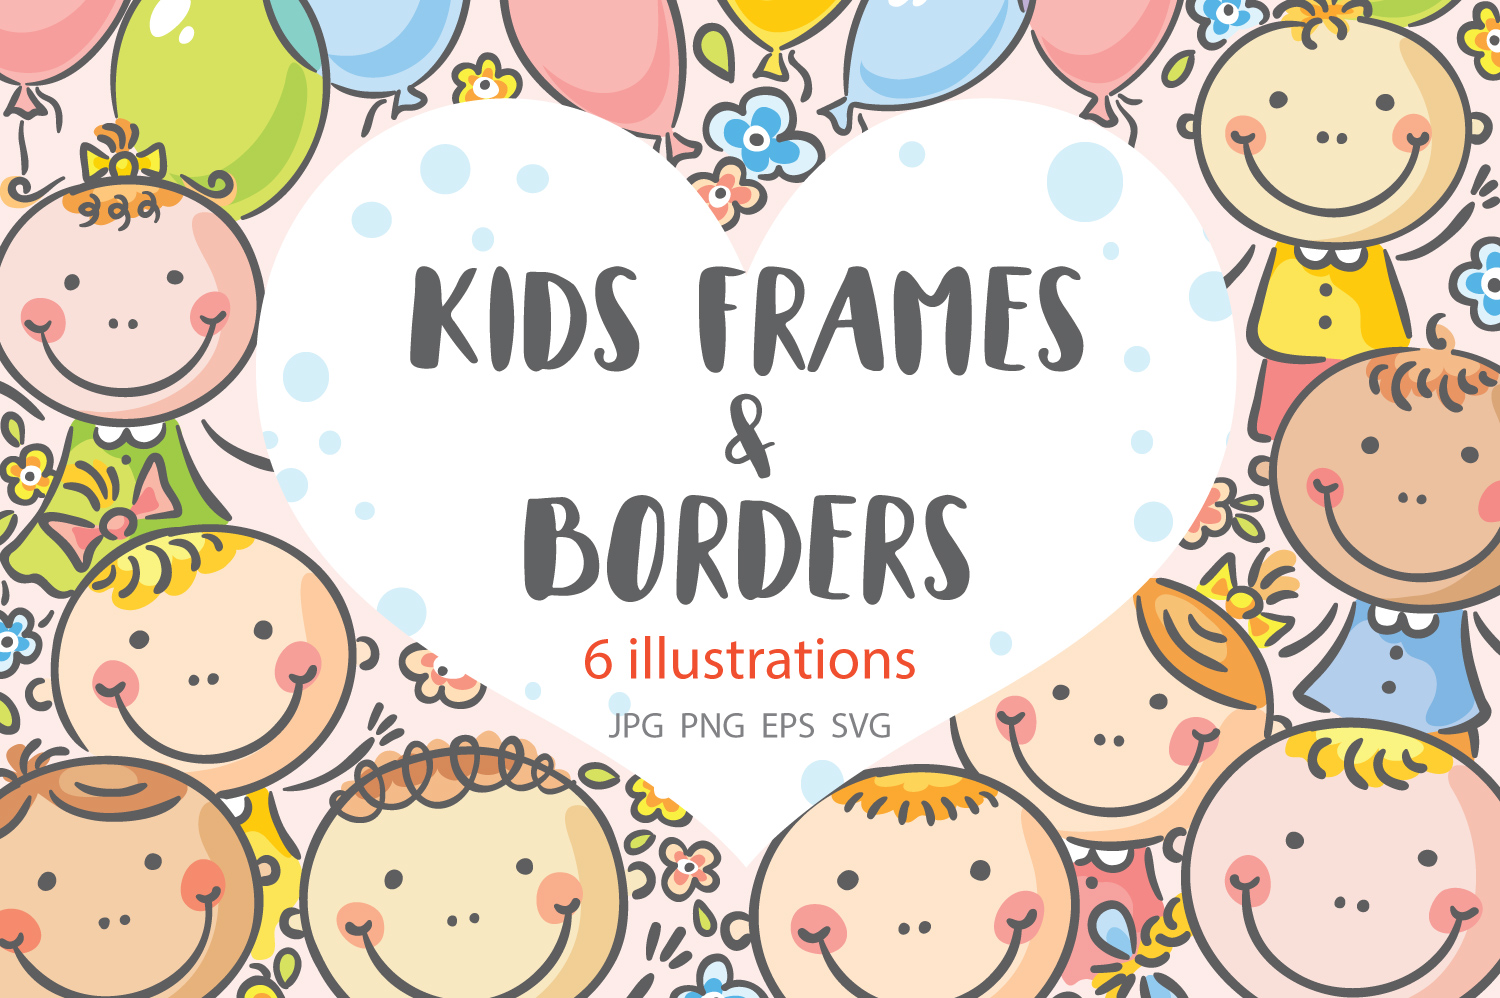 Cartoon happy kids frames and borders vector illustration set